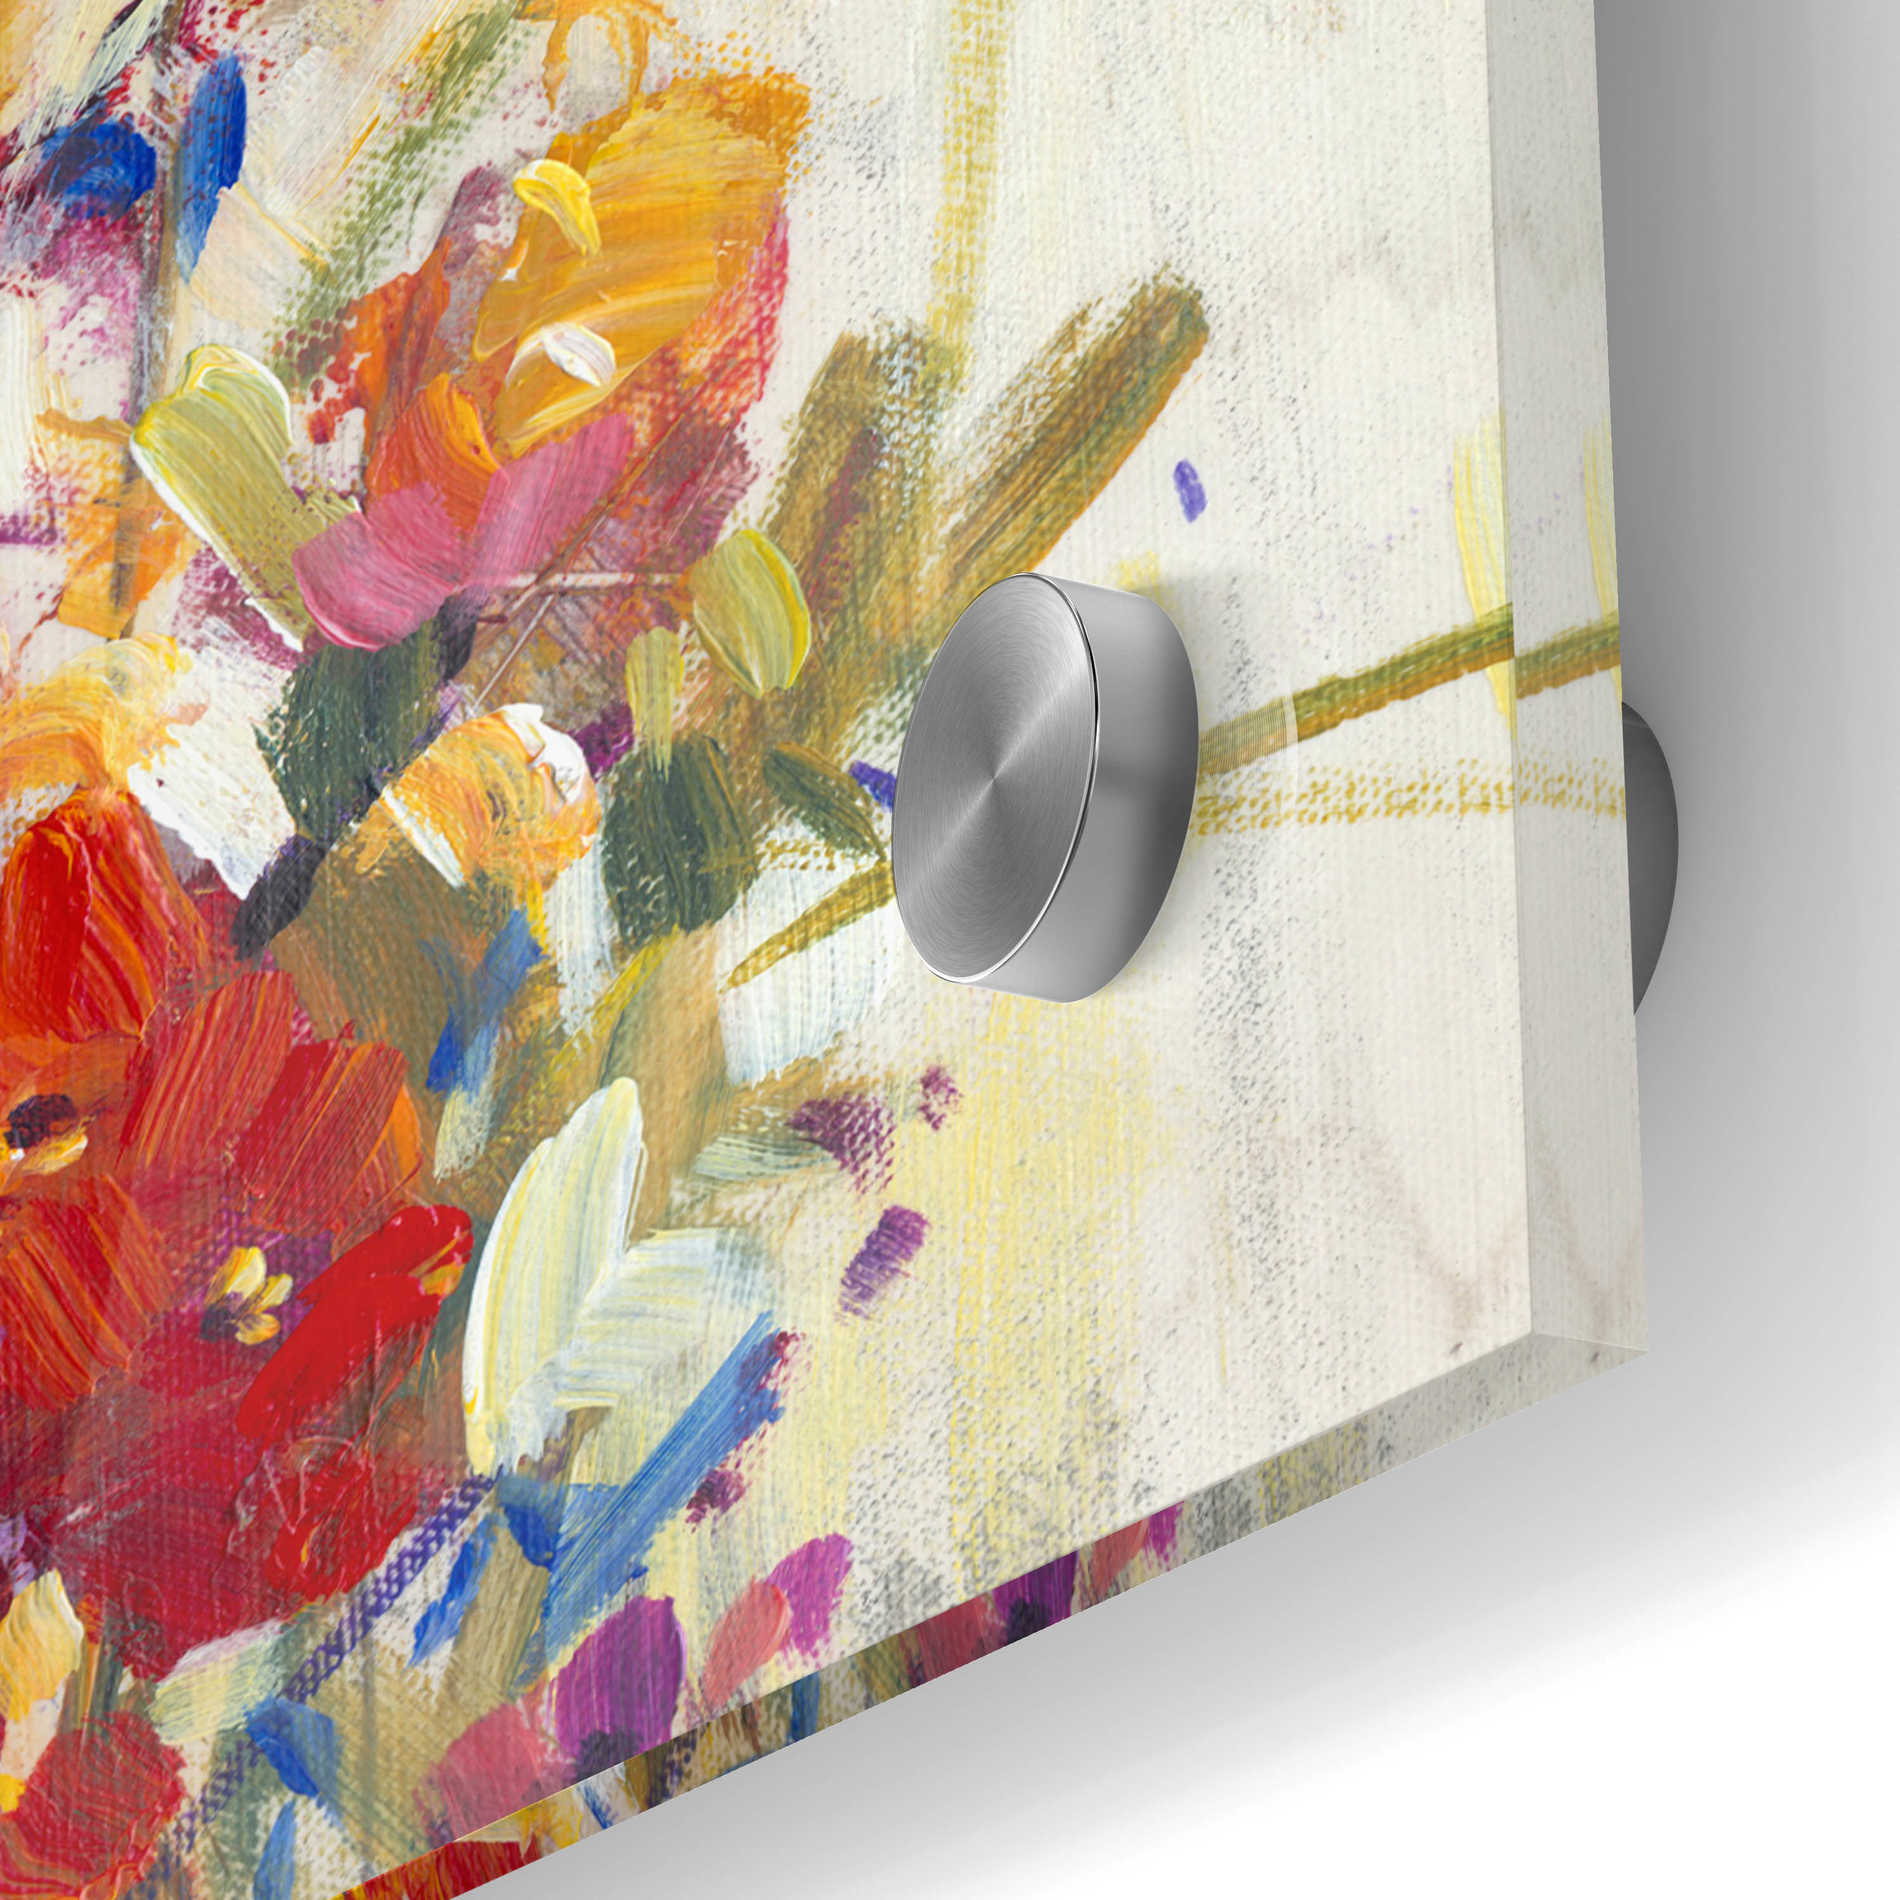 Epic Art 'Mixed Bouquet II' by Tim O'Toole, Acrylic Glass Wall Art,24x24